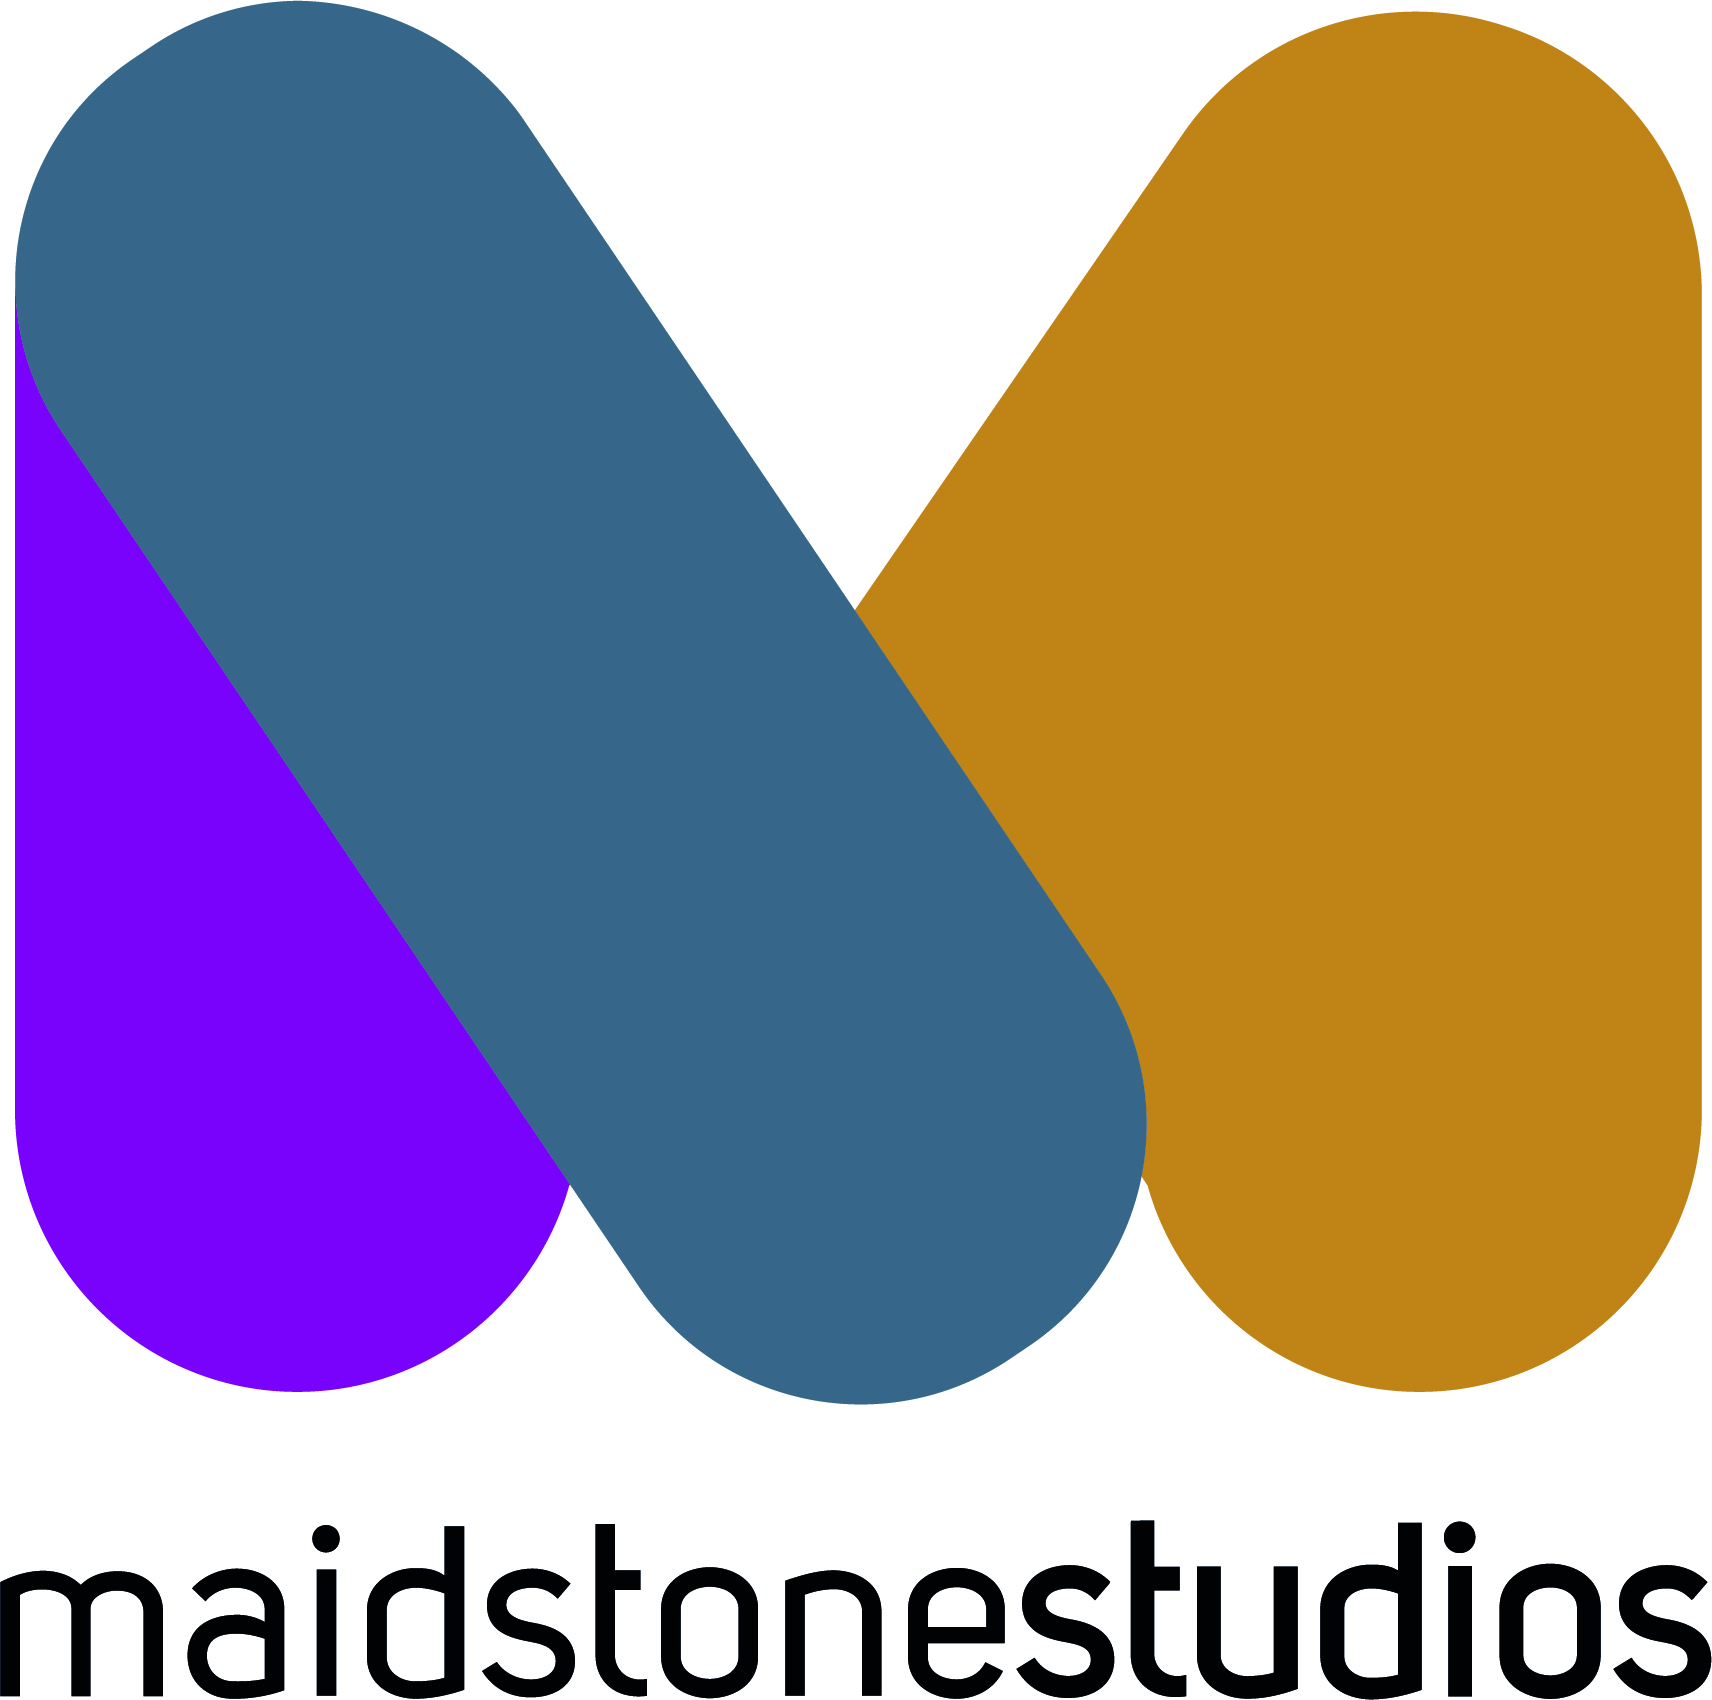 maidstone studios logo - relocating to kent